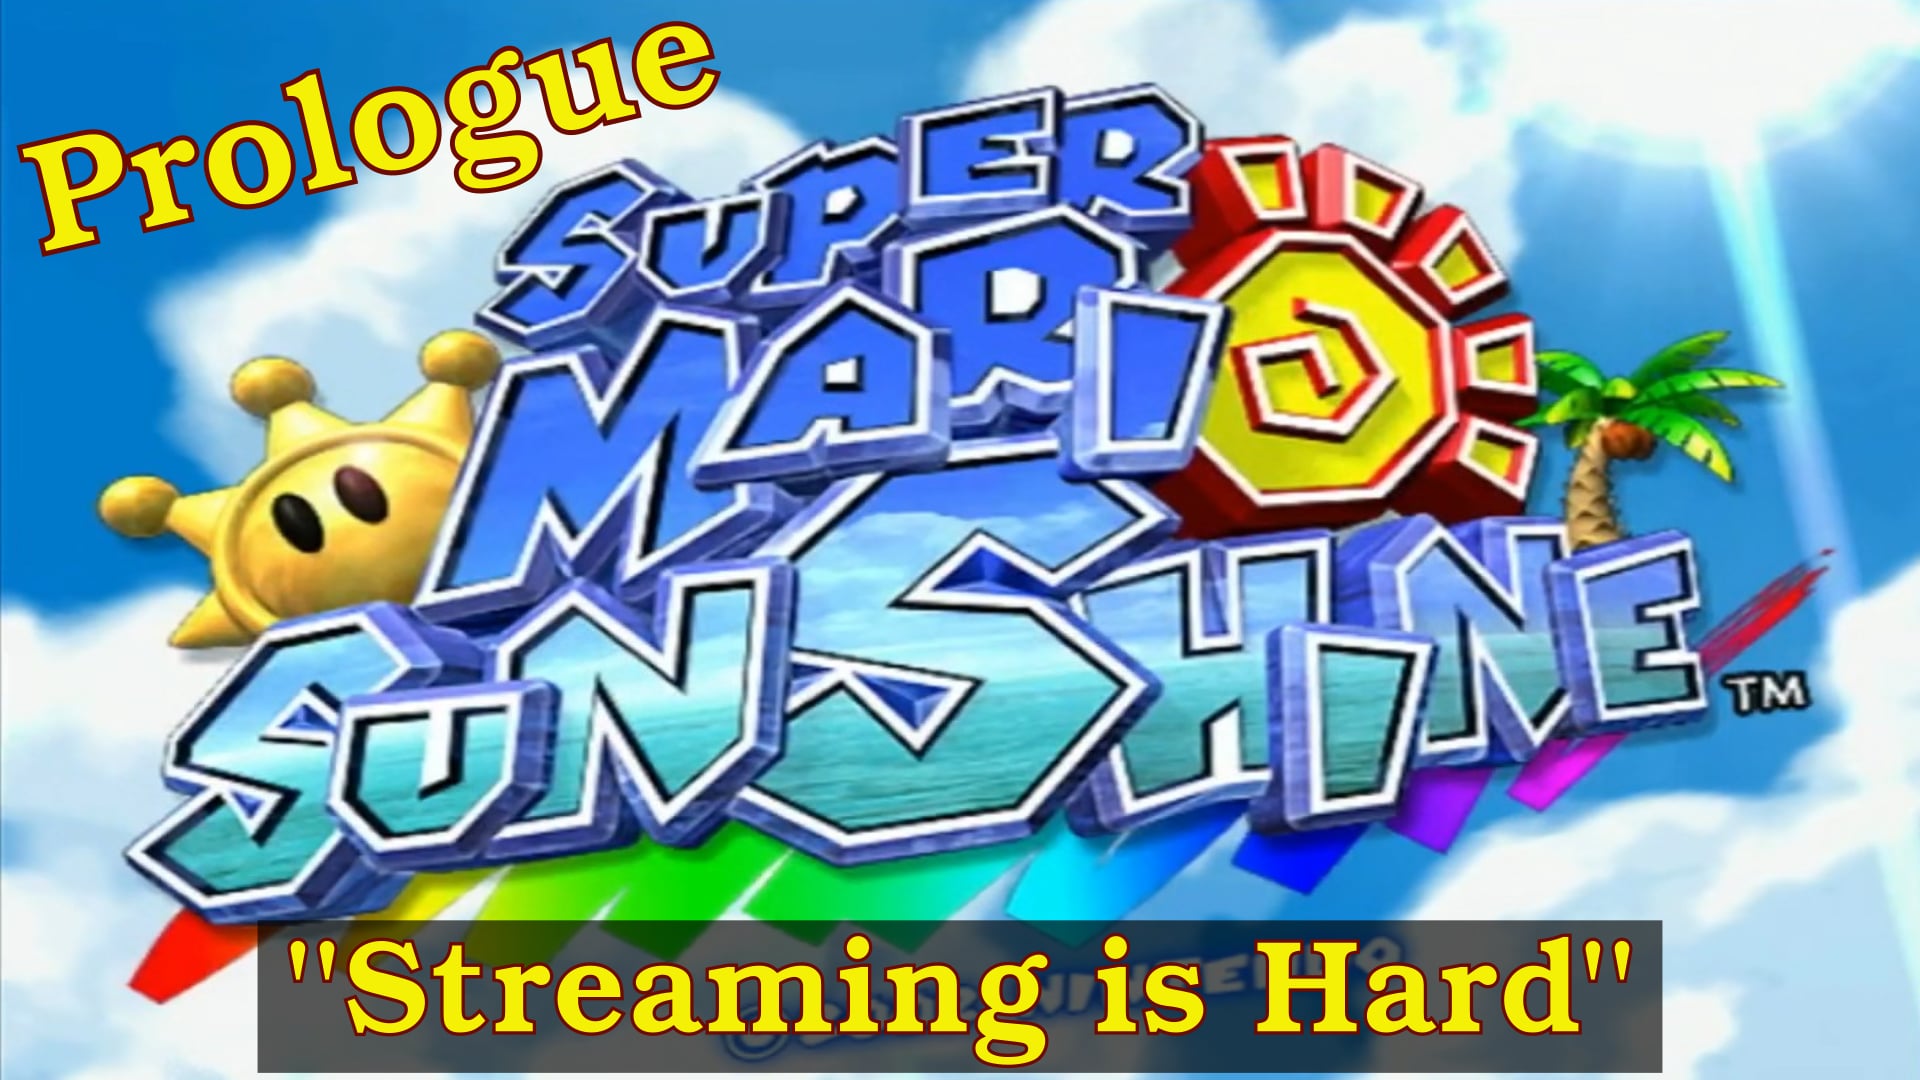 Super Mario Sunshine PROLOGUE - Streaming is Hard